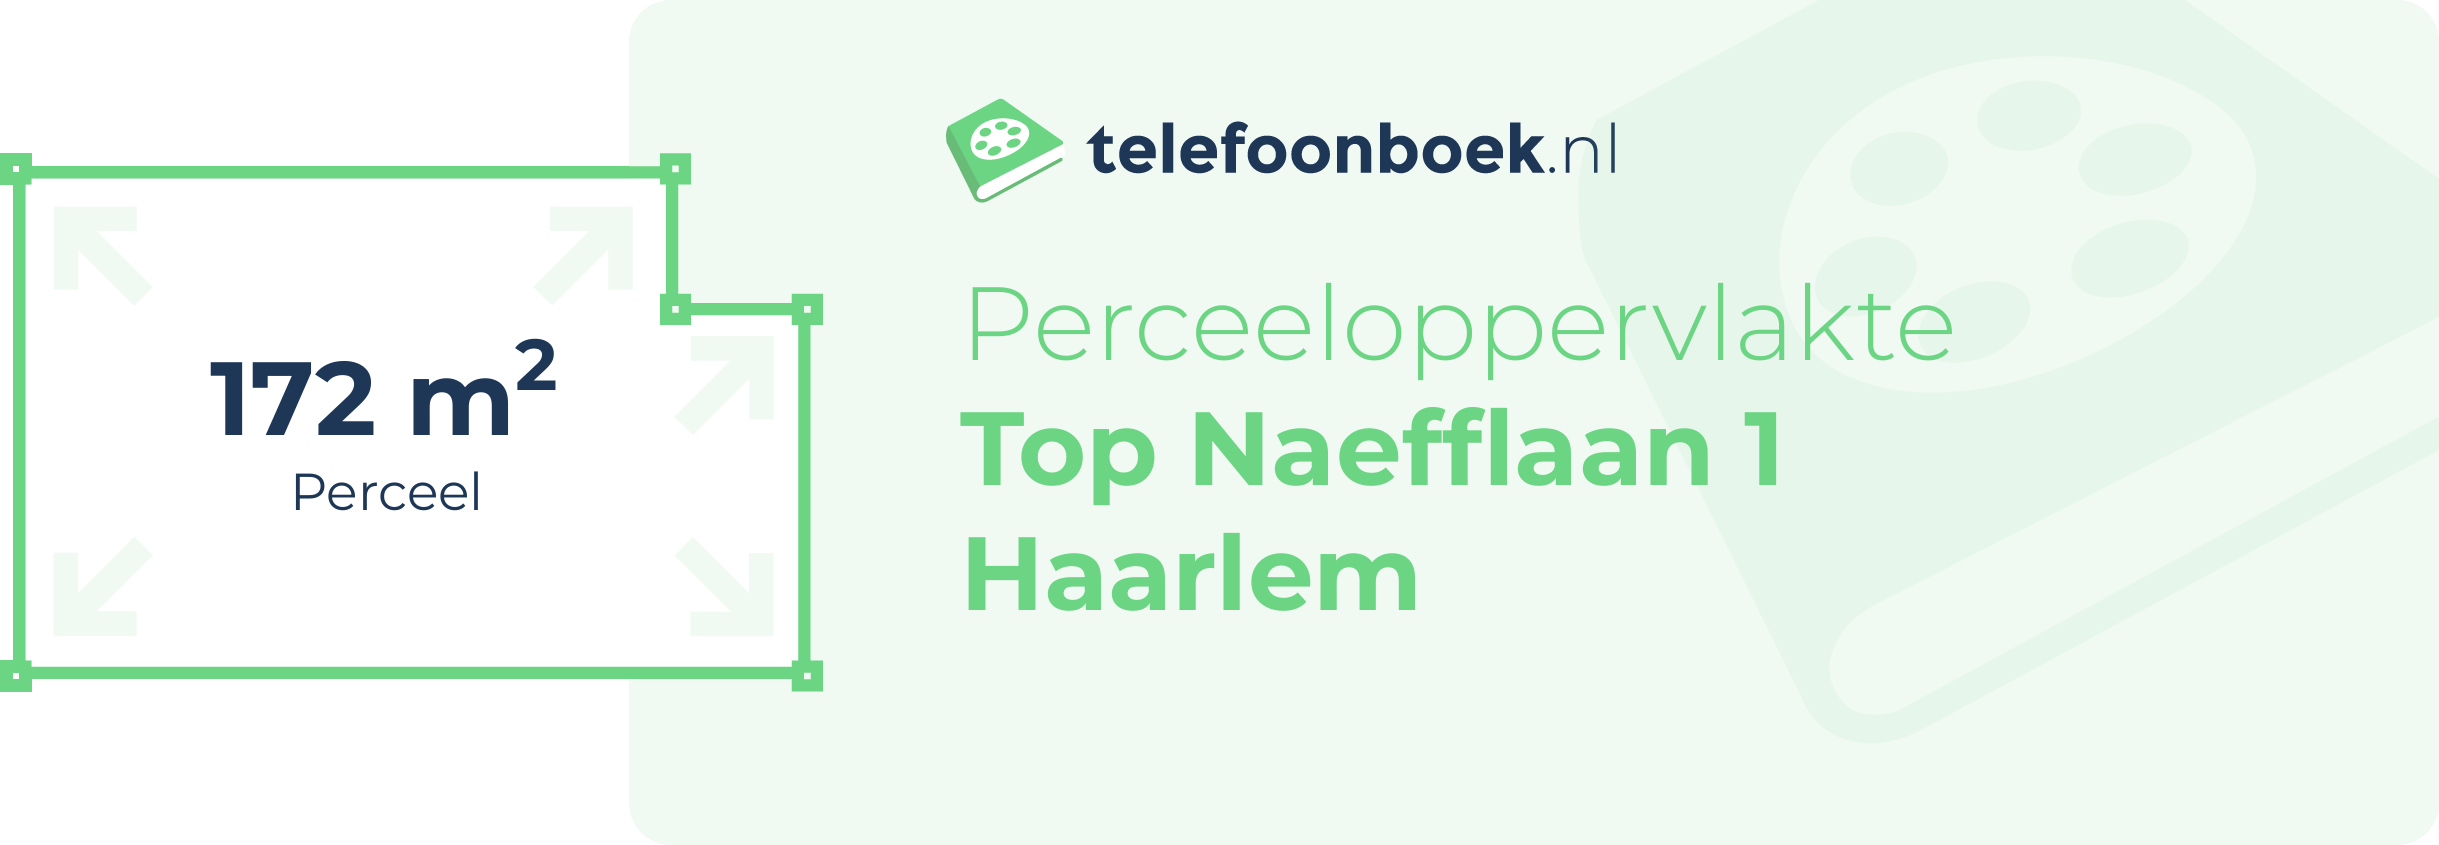 Perceeloppervlakte Top Naefflaan 1 Haarlem